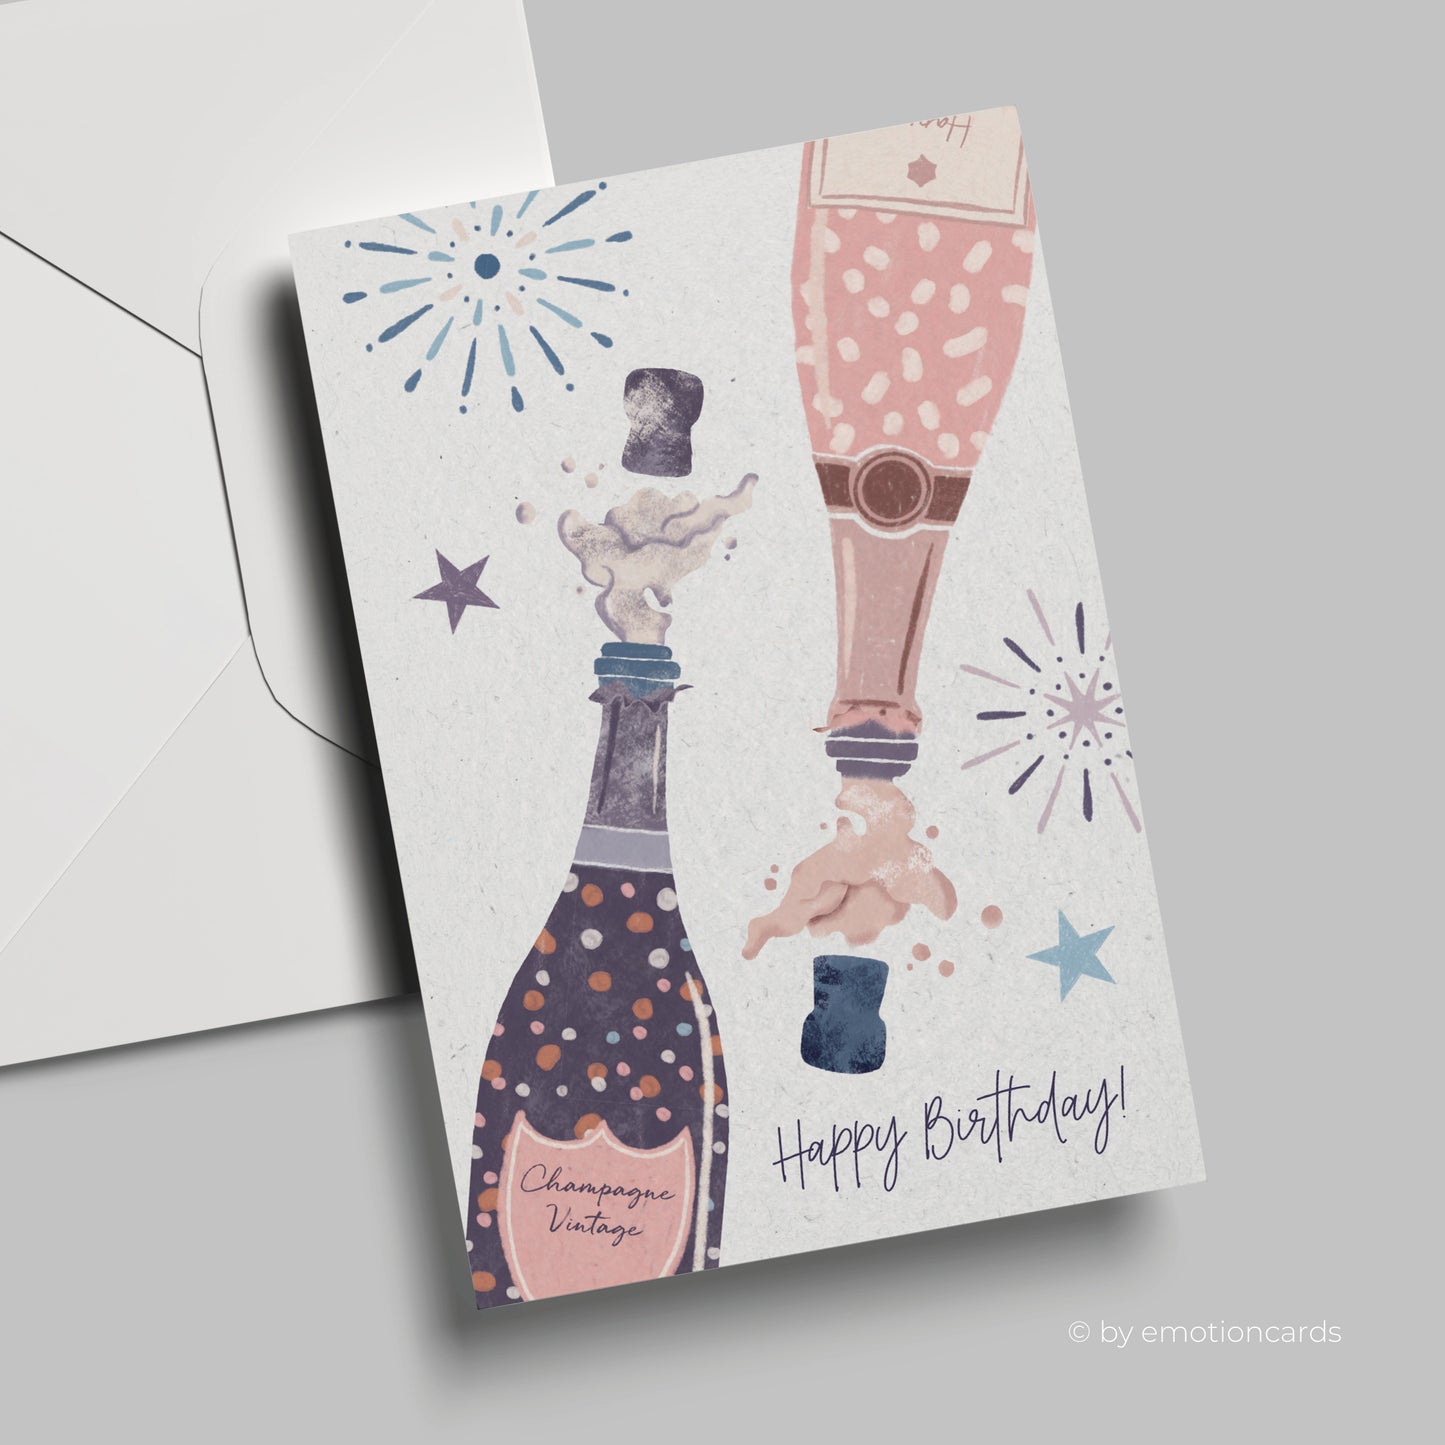 Geburtstagskarte | Happy Birthday! 2 x knallende Korken